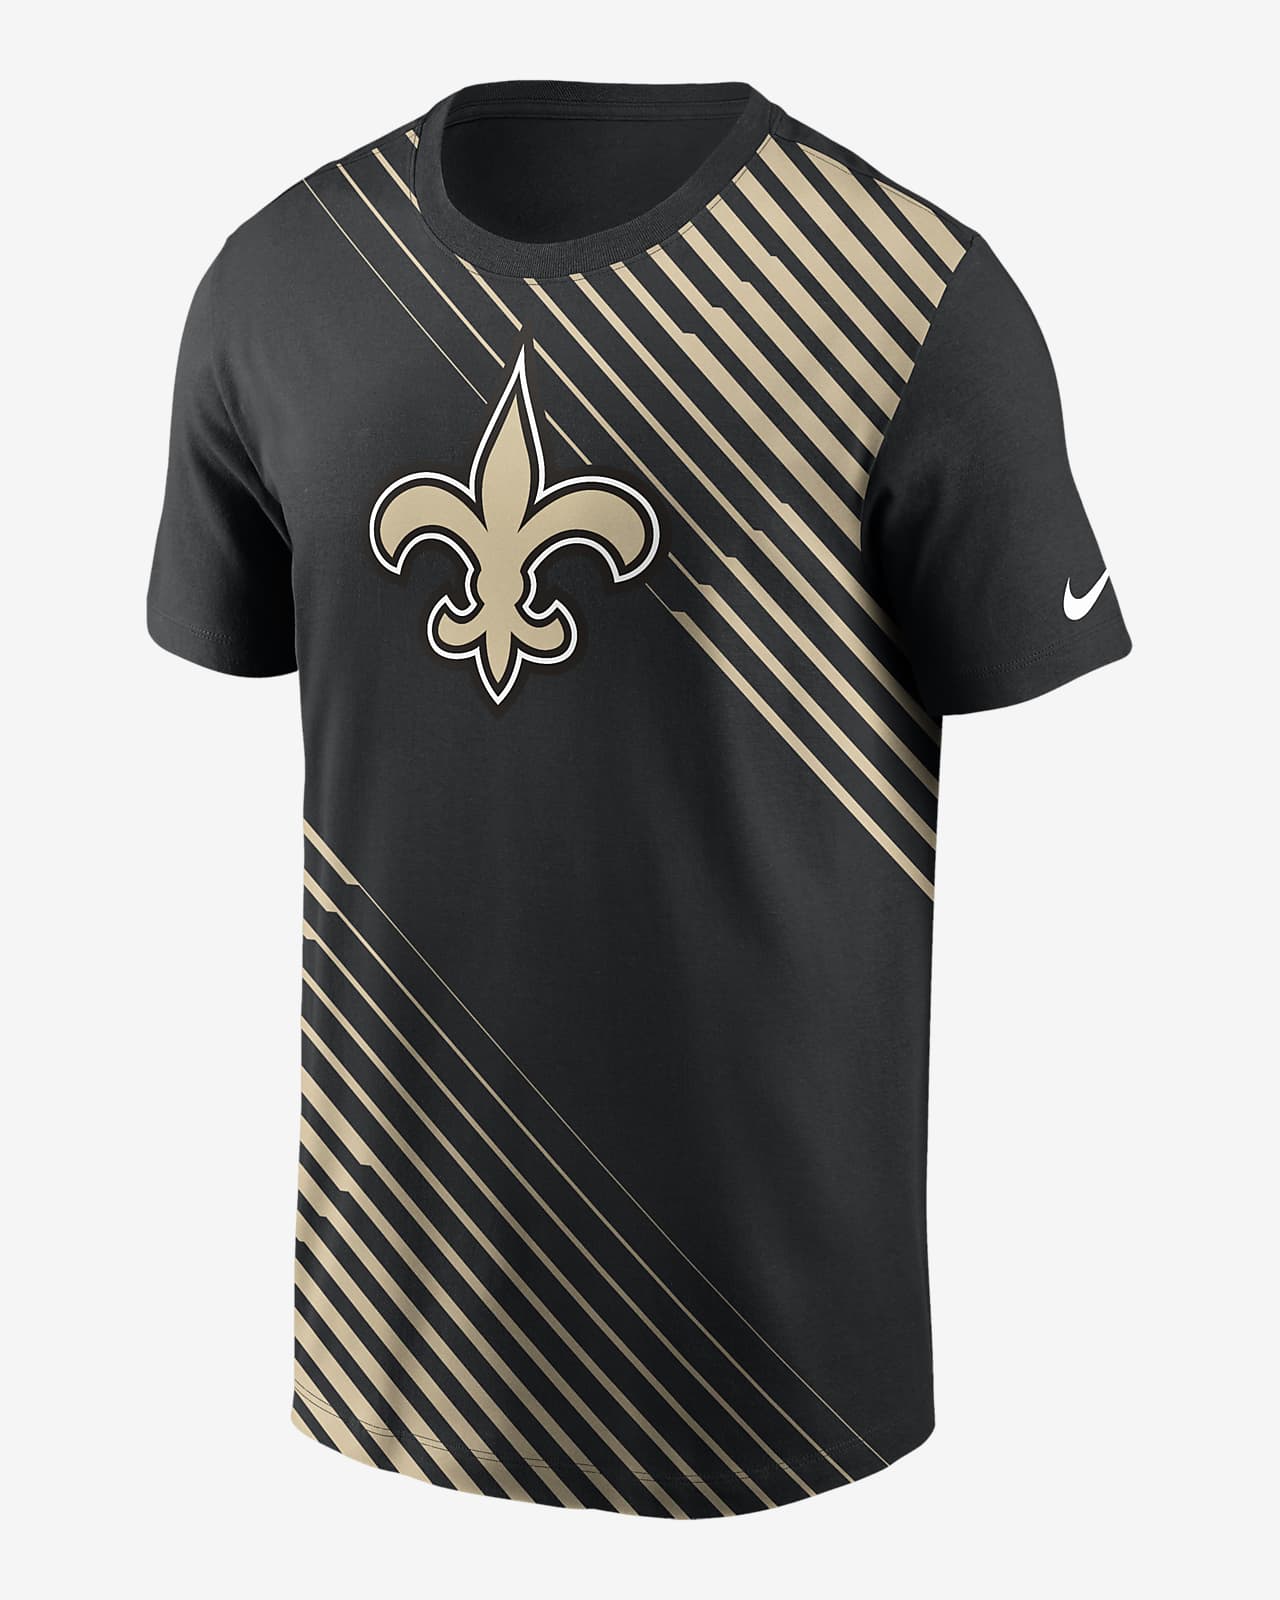 Playera para hombre Nike Yard Line (NFL New Orleans Saints)